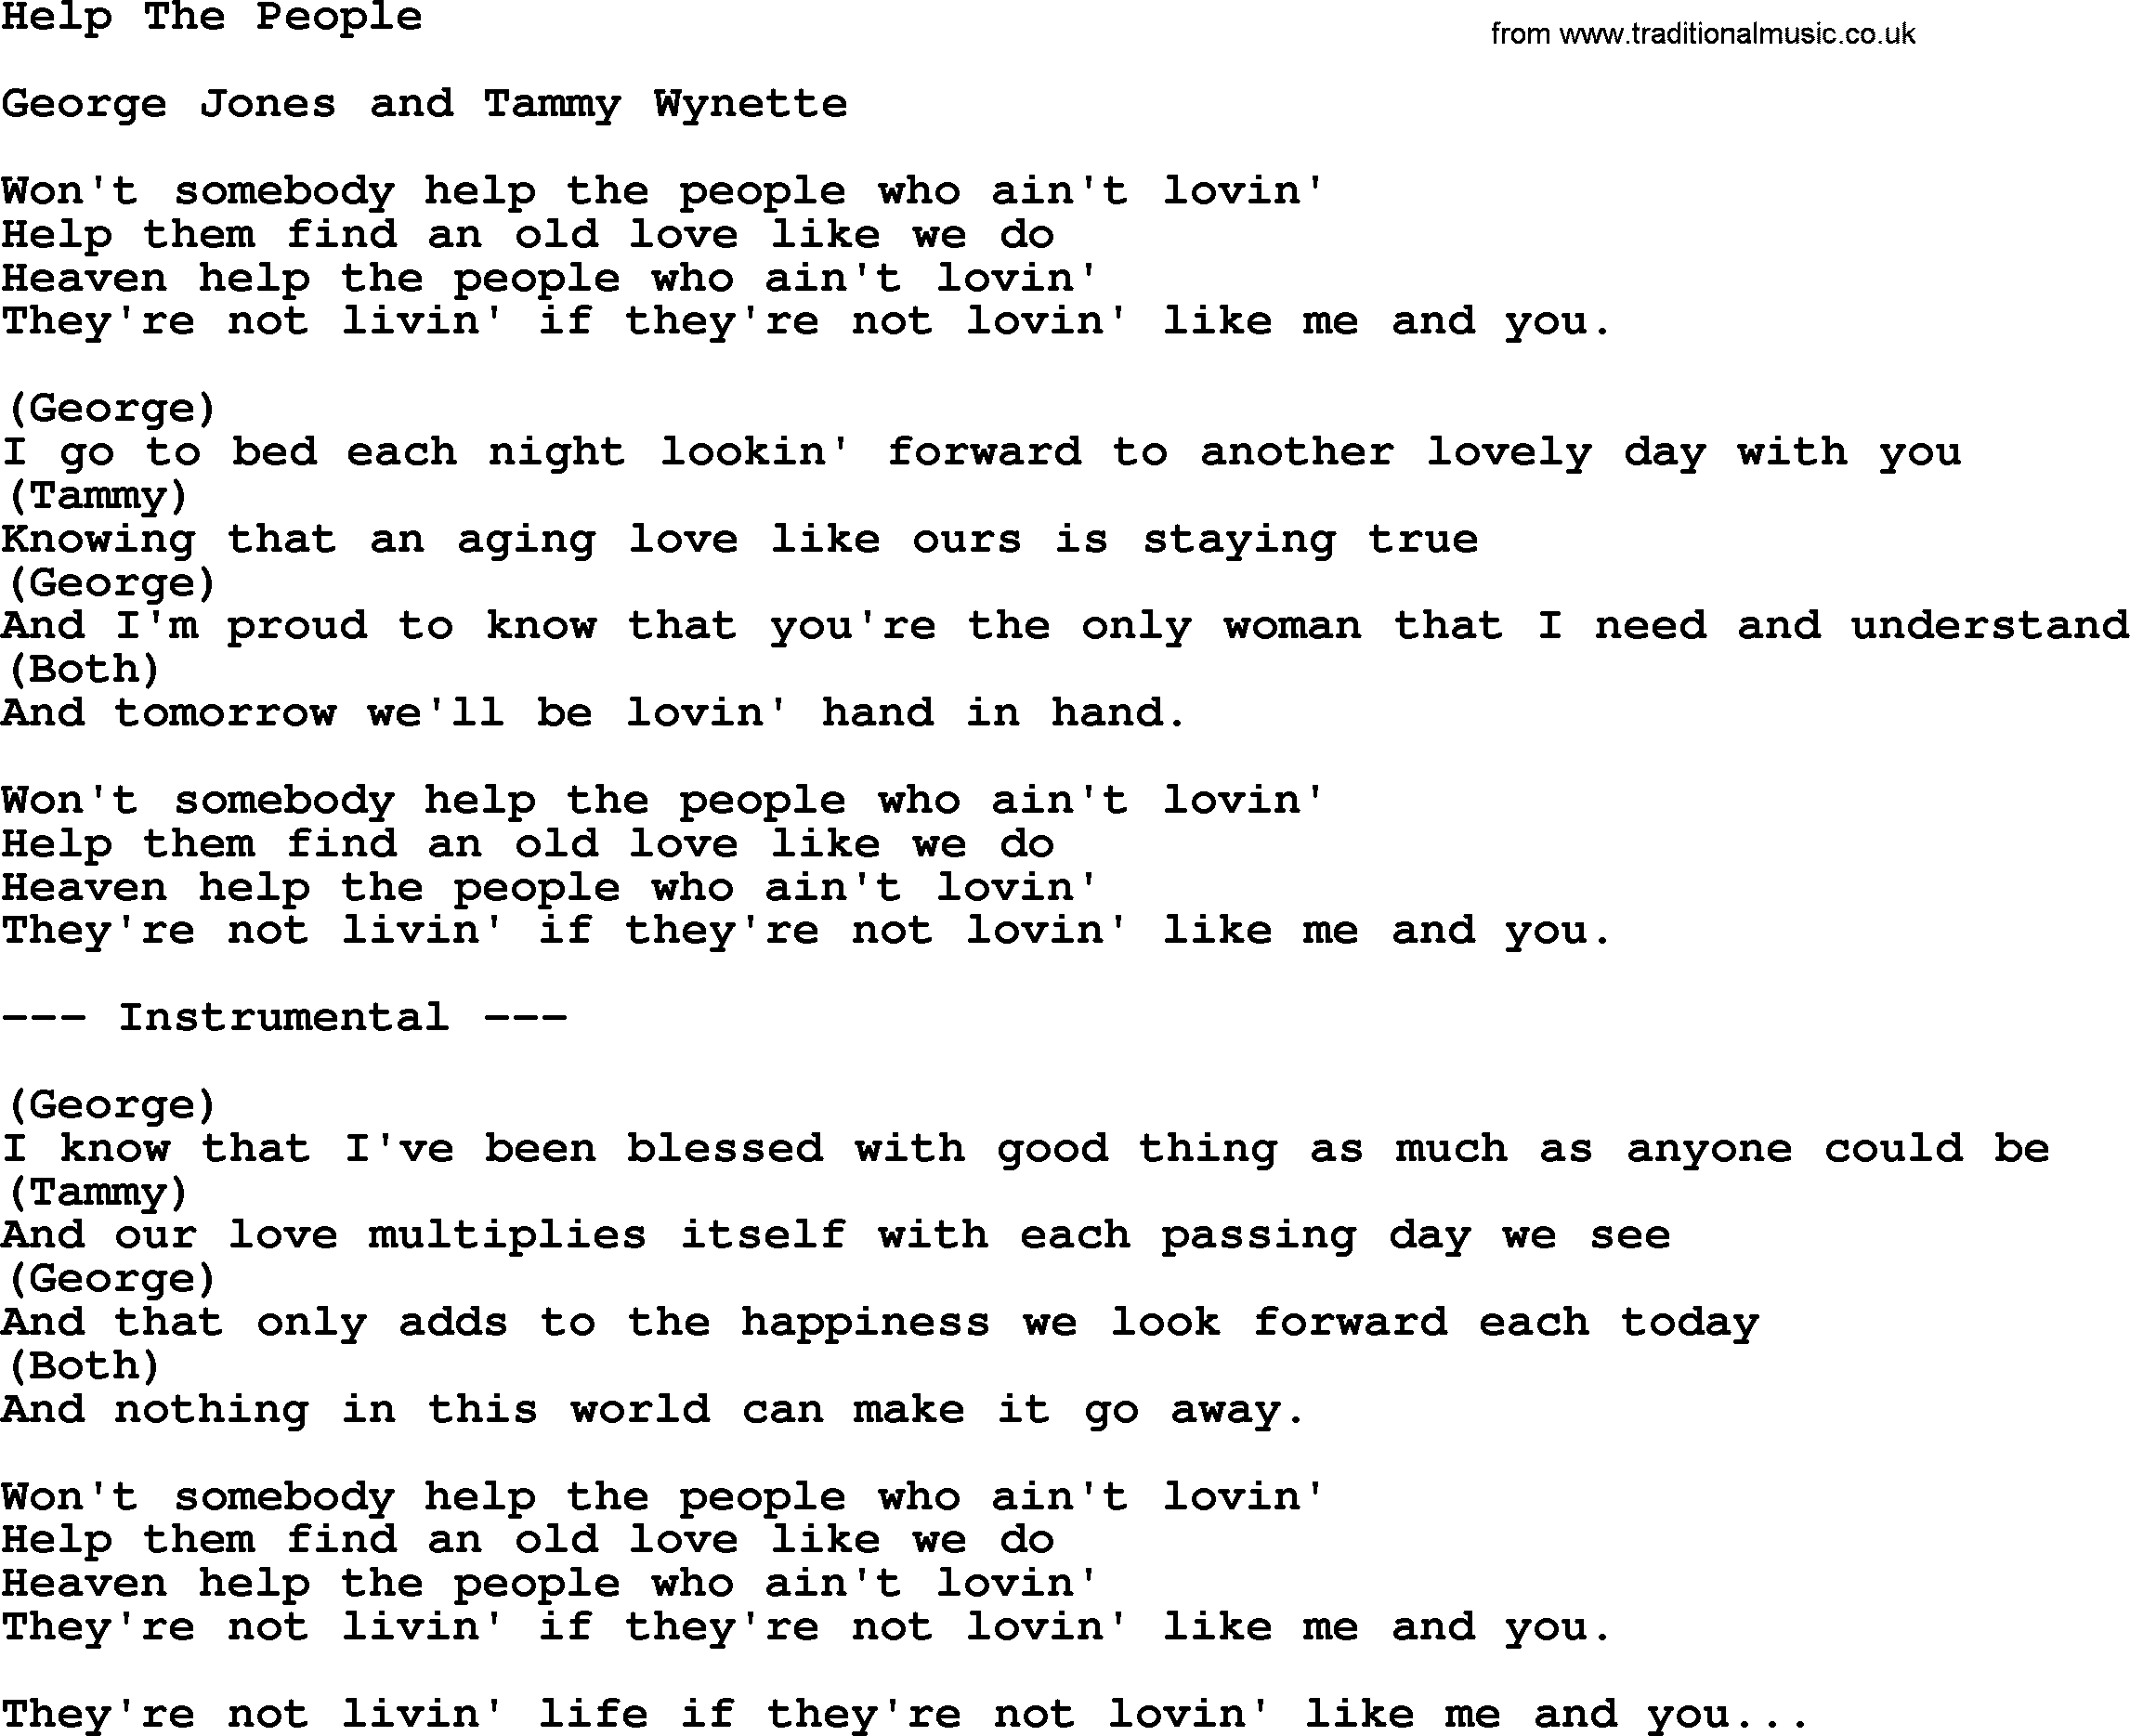 George Jones song: Help The People, lyrics